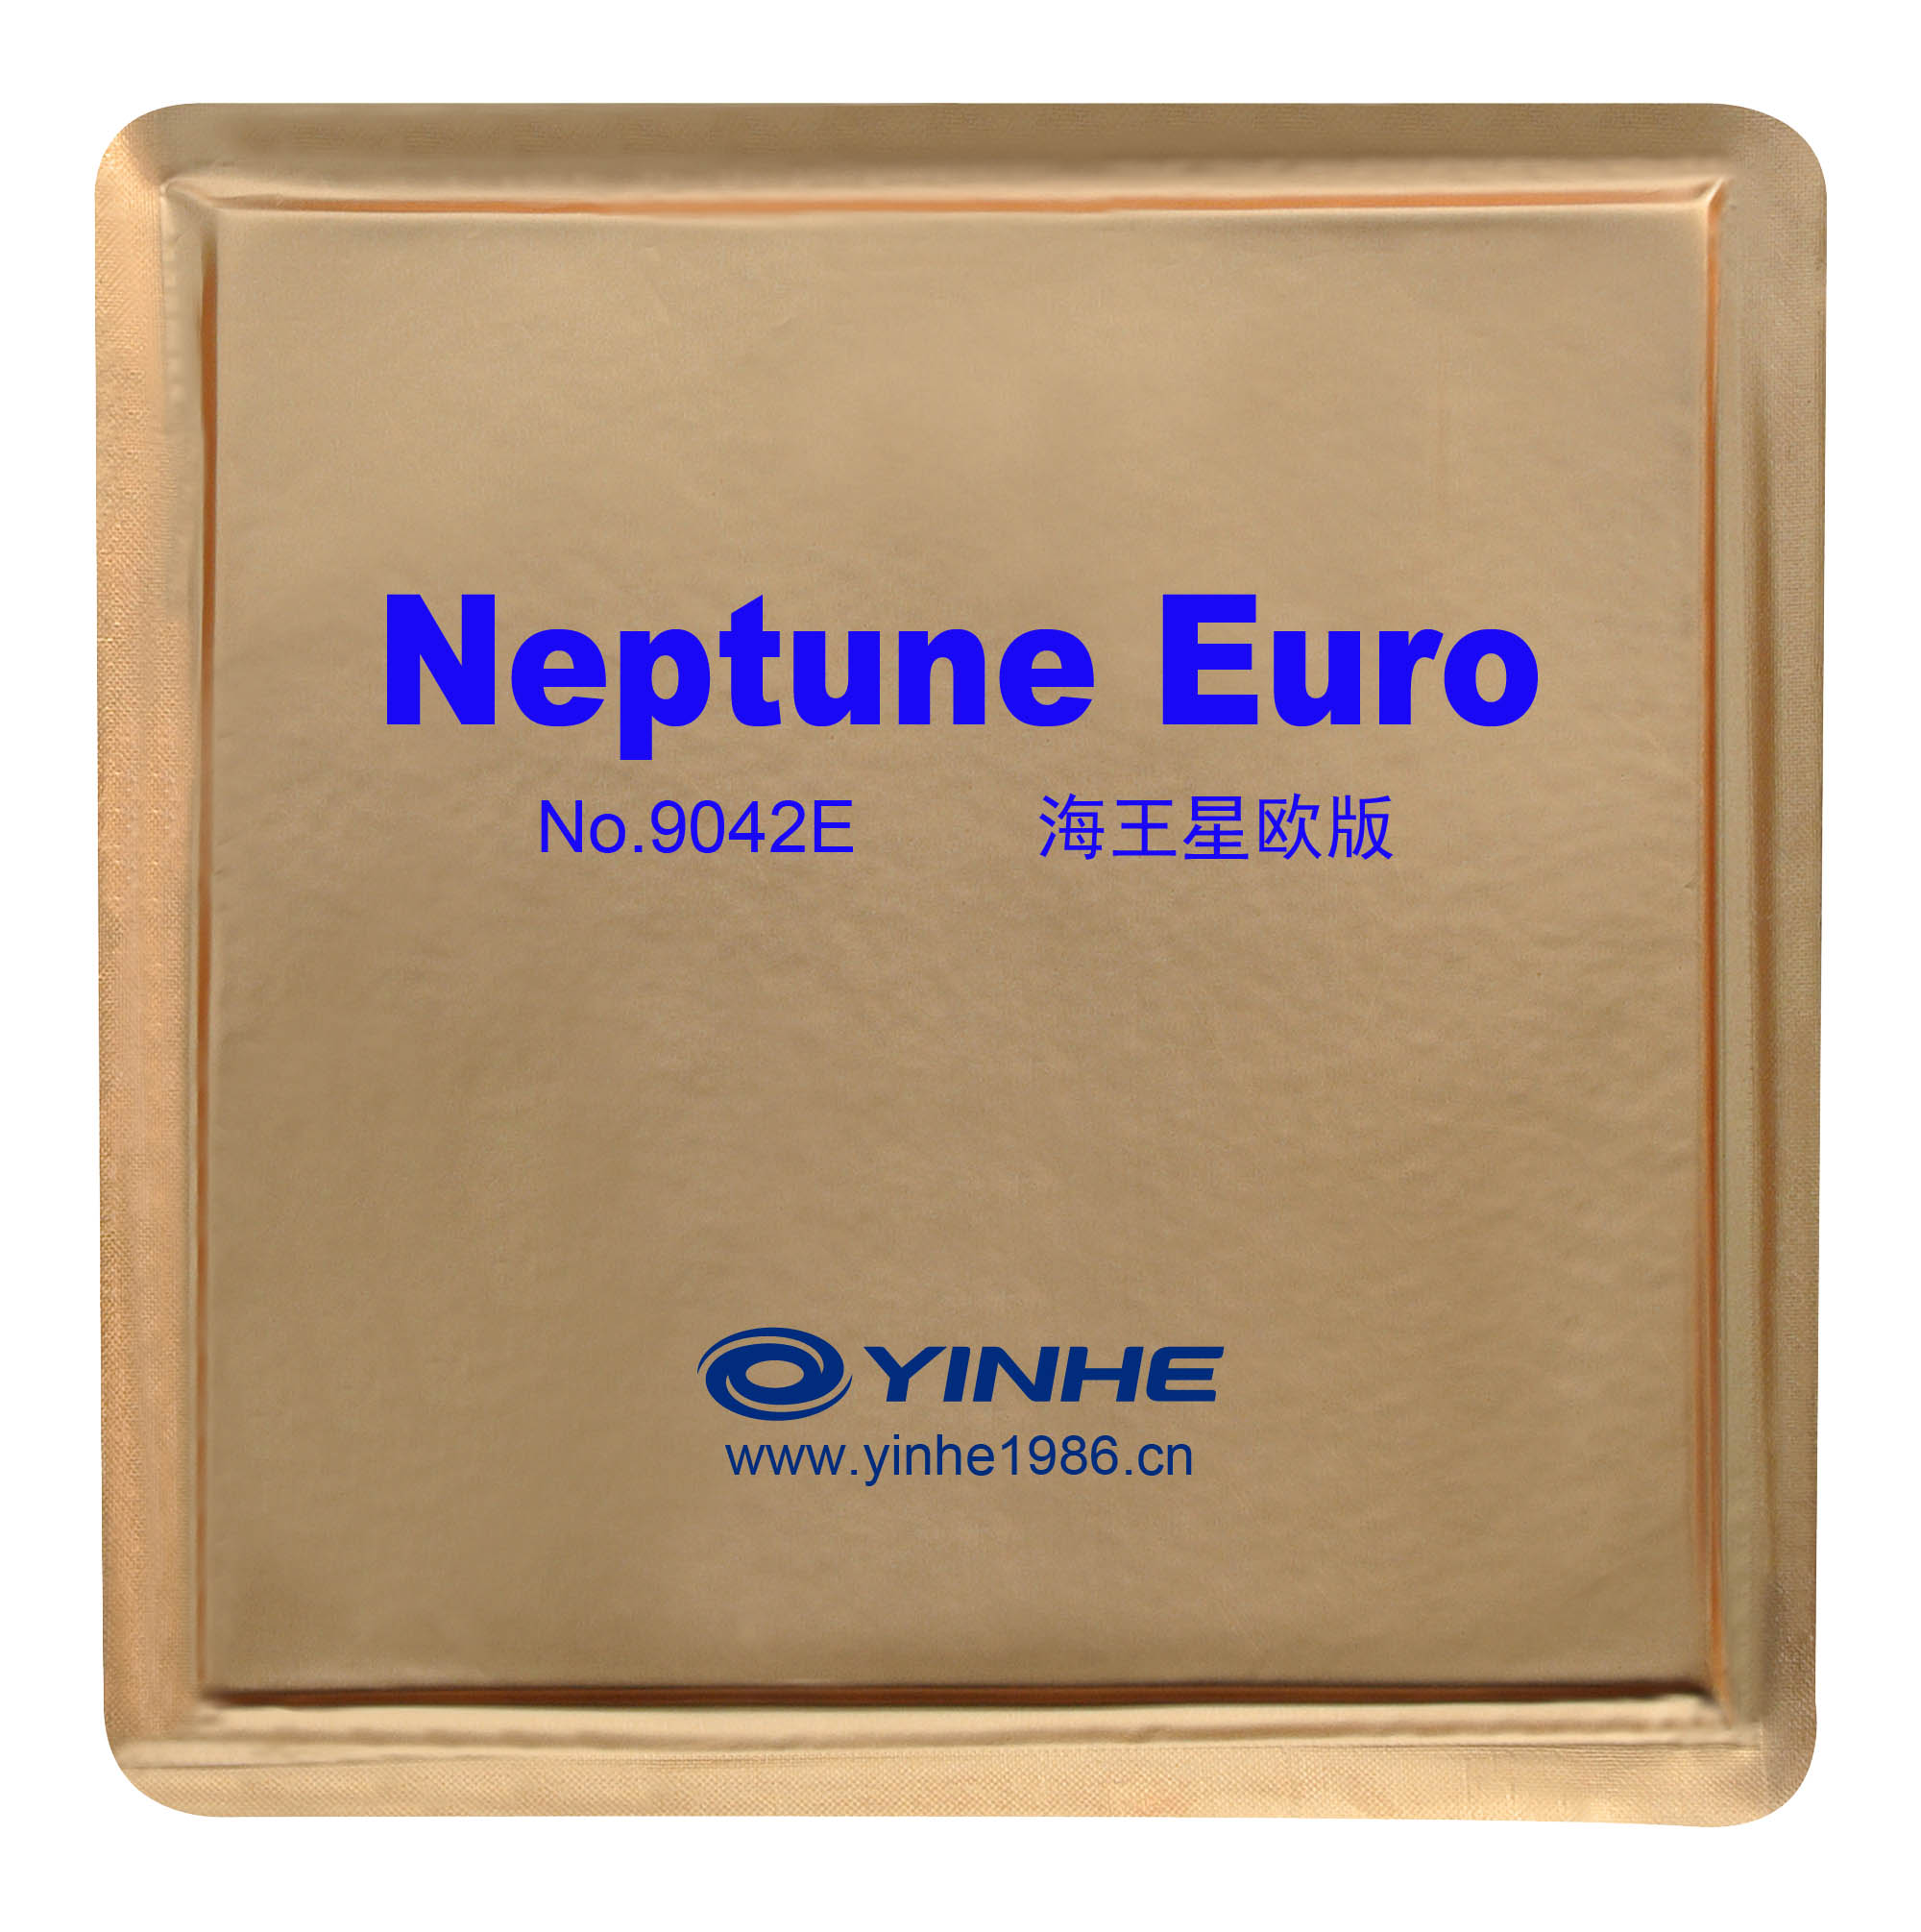 No.9042 E Neptune Euro